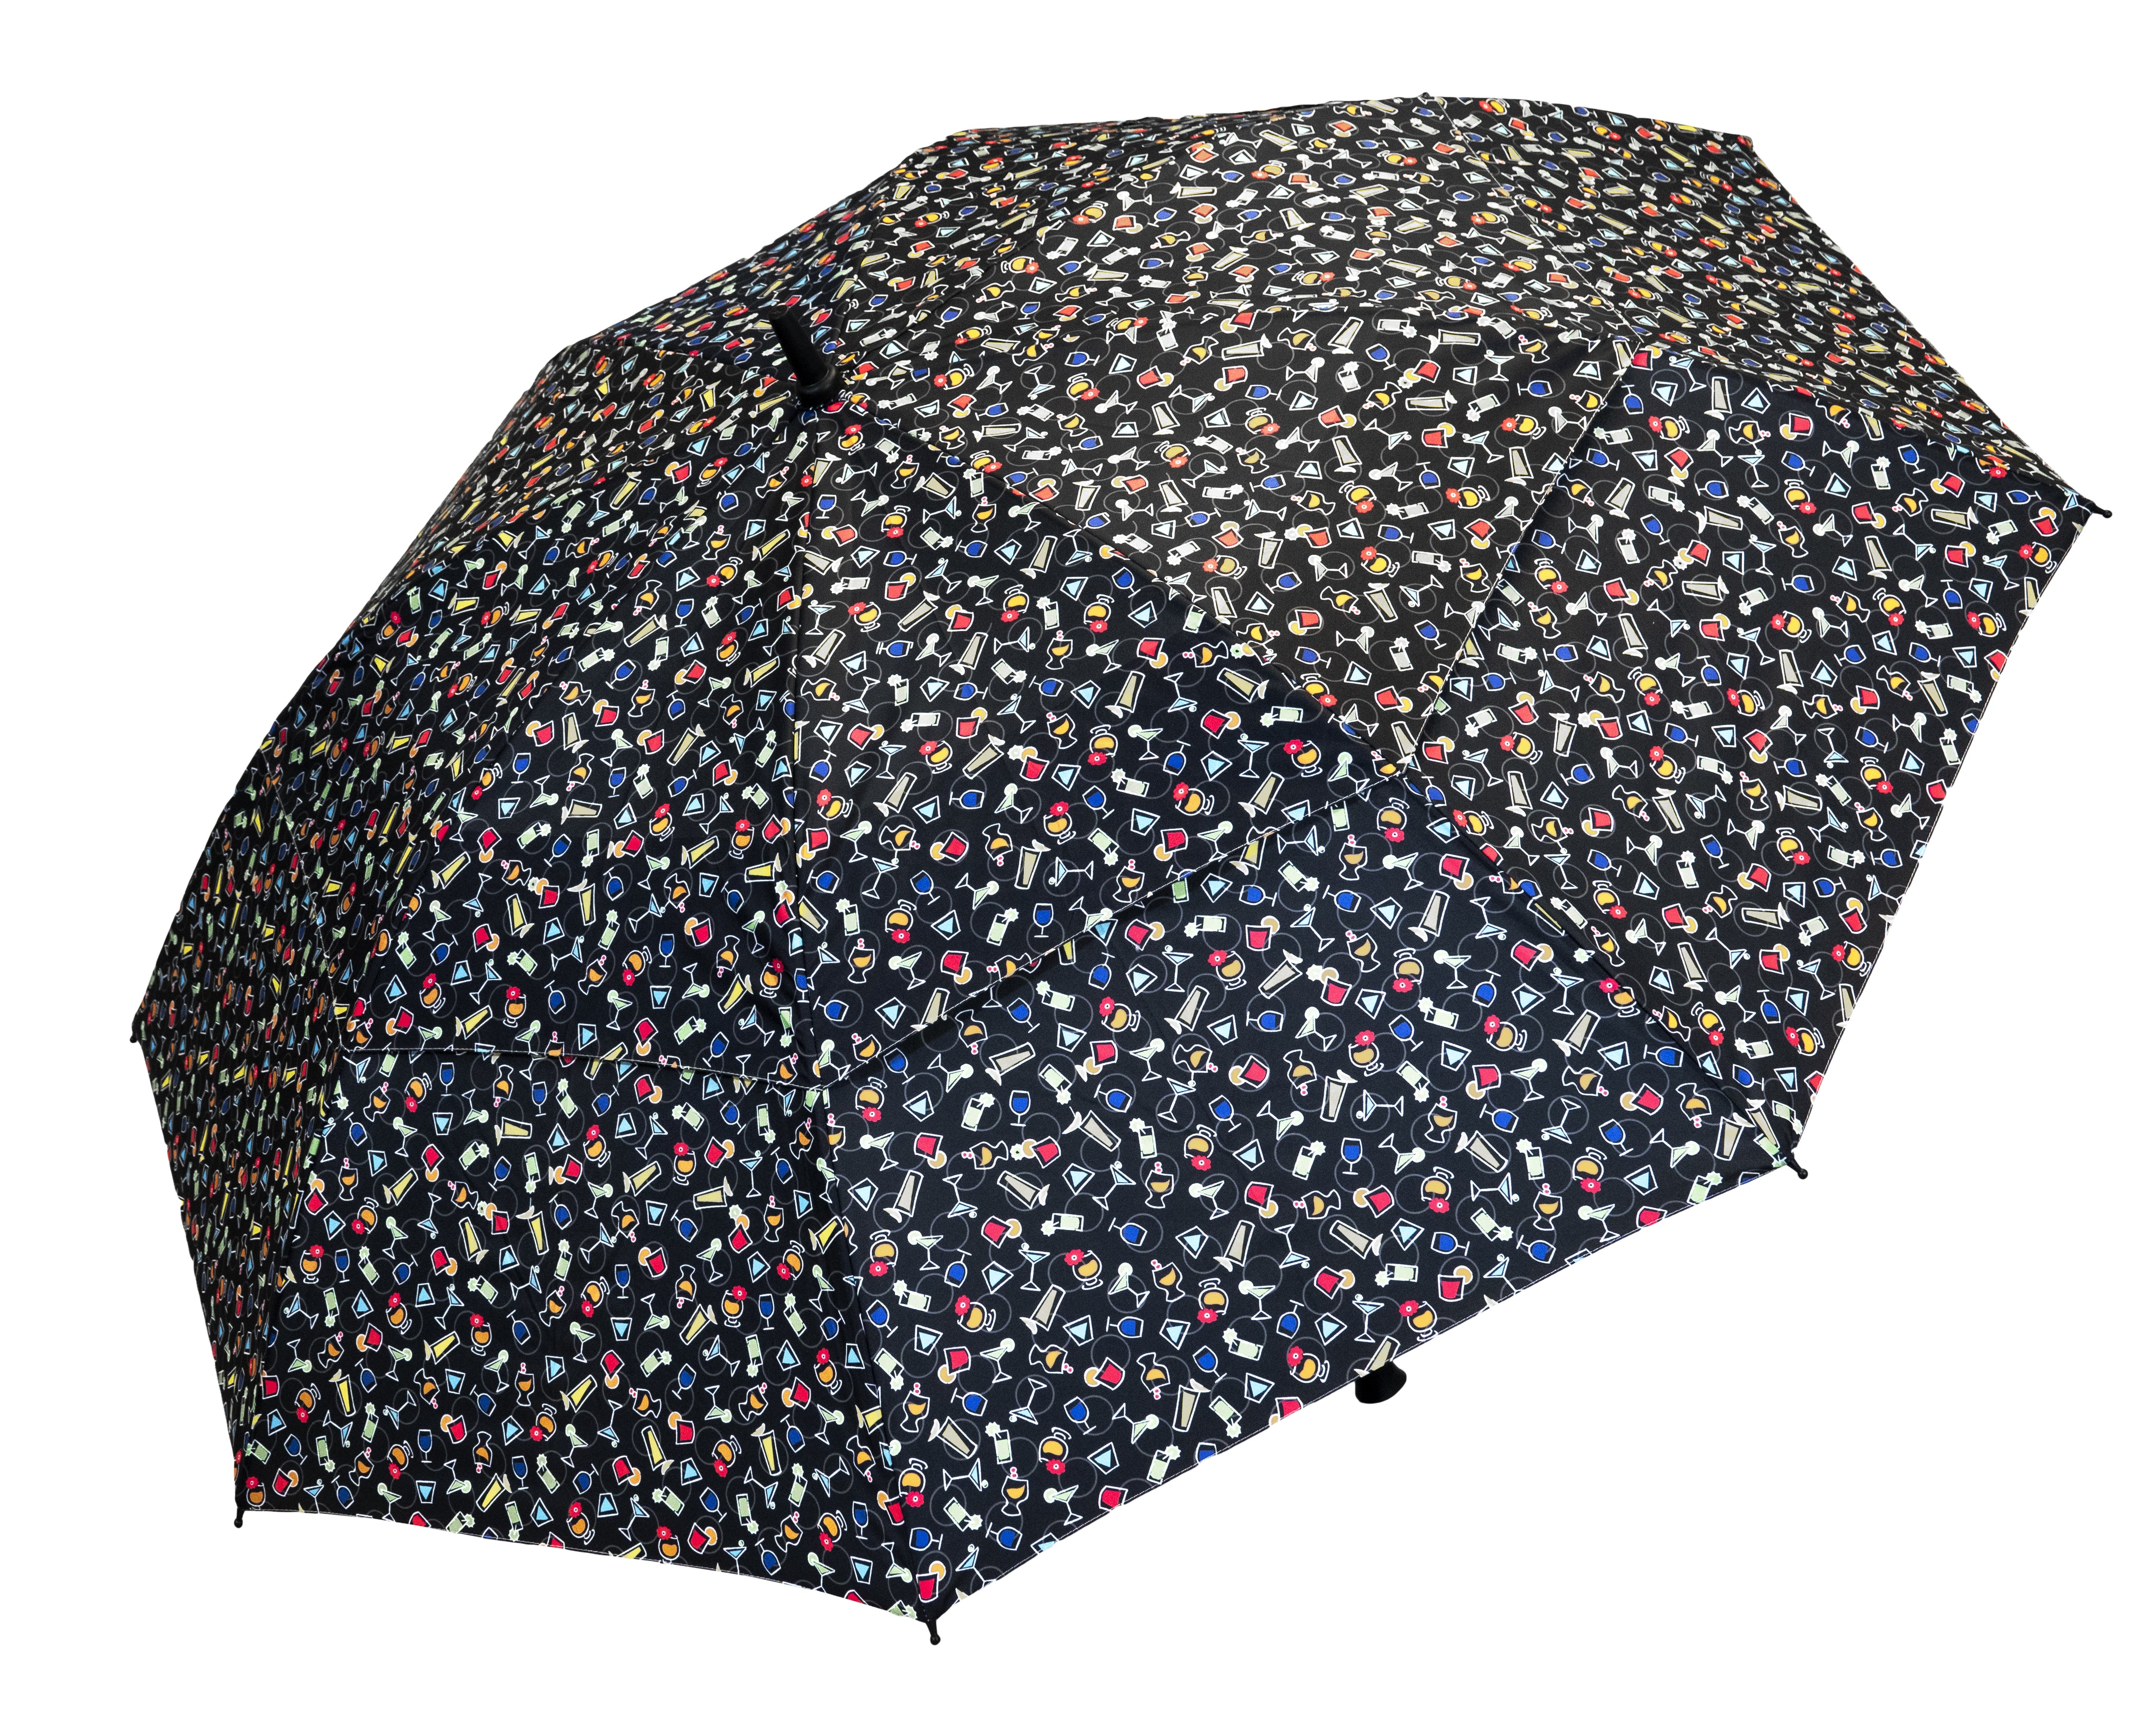 Burton to Unveil New Ladies LDX Umbrellas in Early August